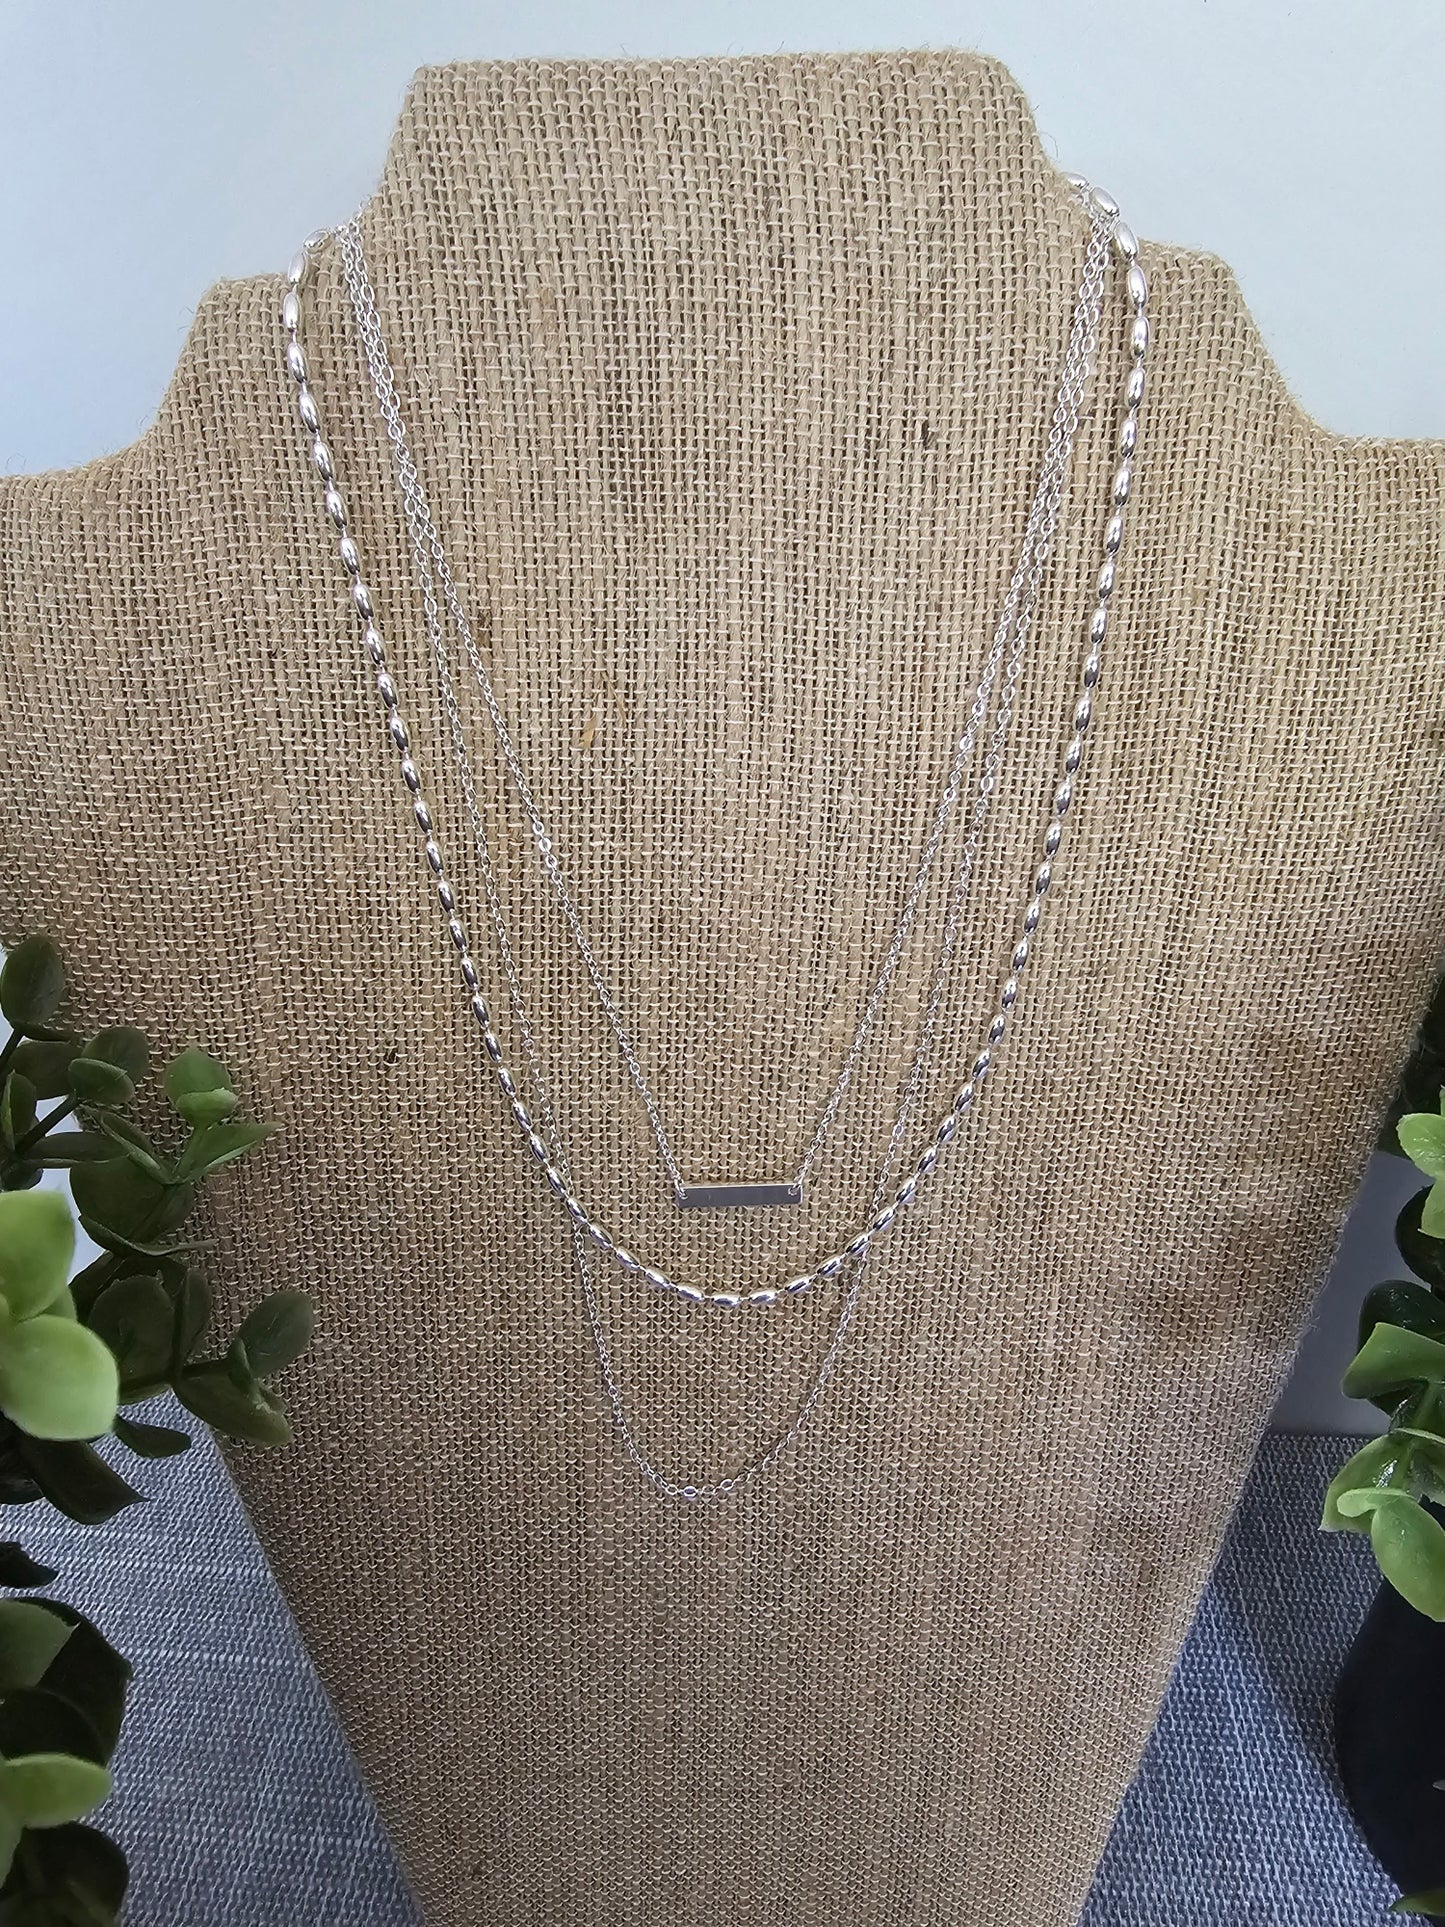 Triple Chain Silver Necklace